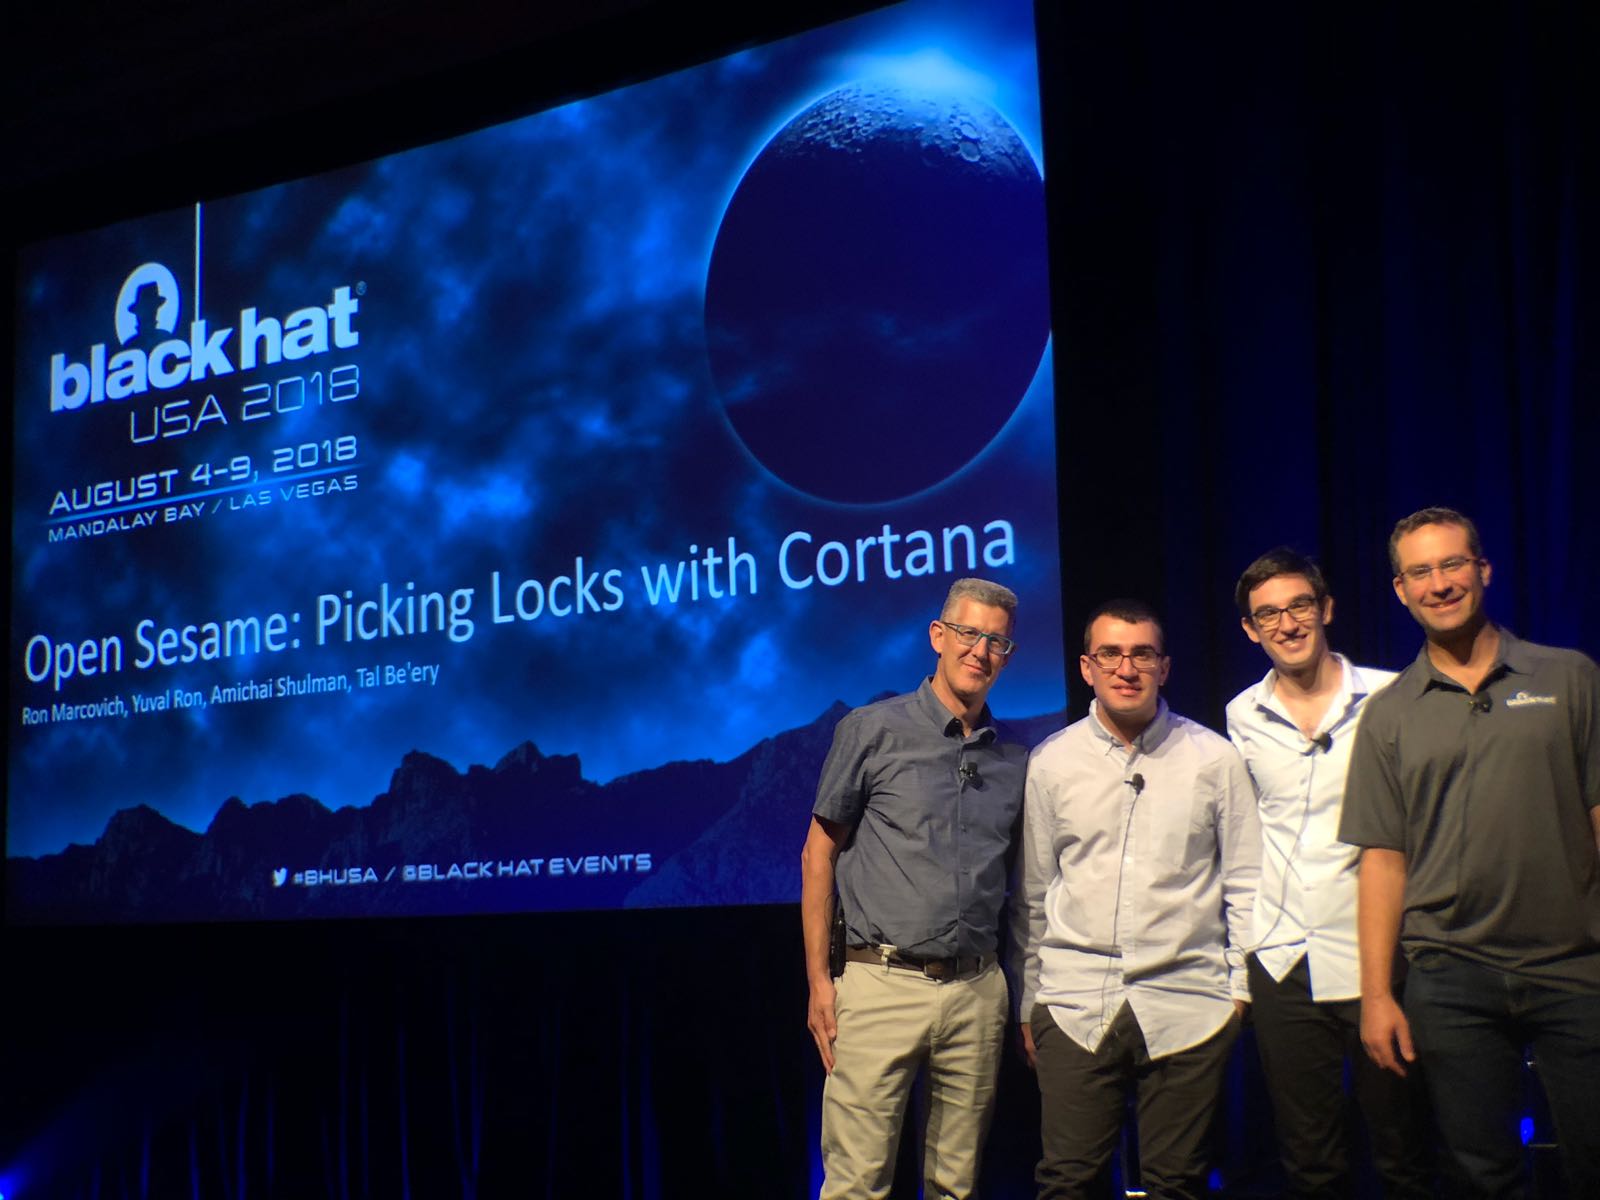 Open Sesame: Picking Locks with Cortana